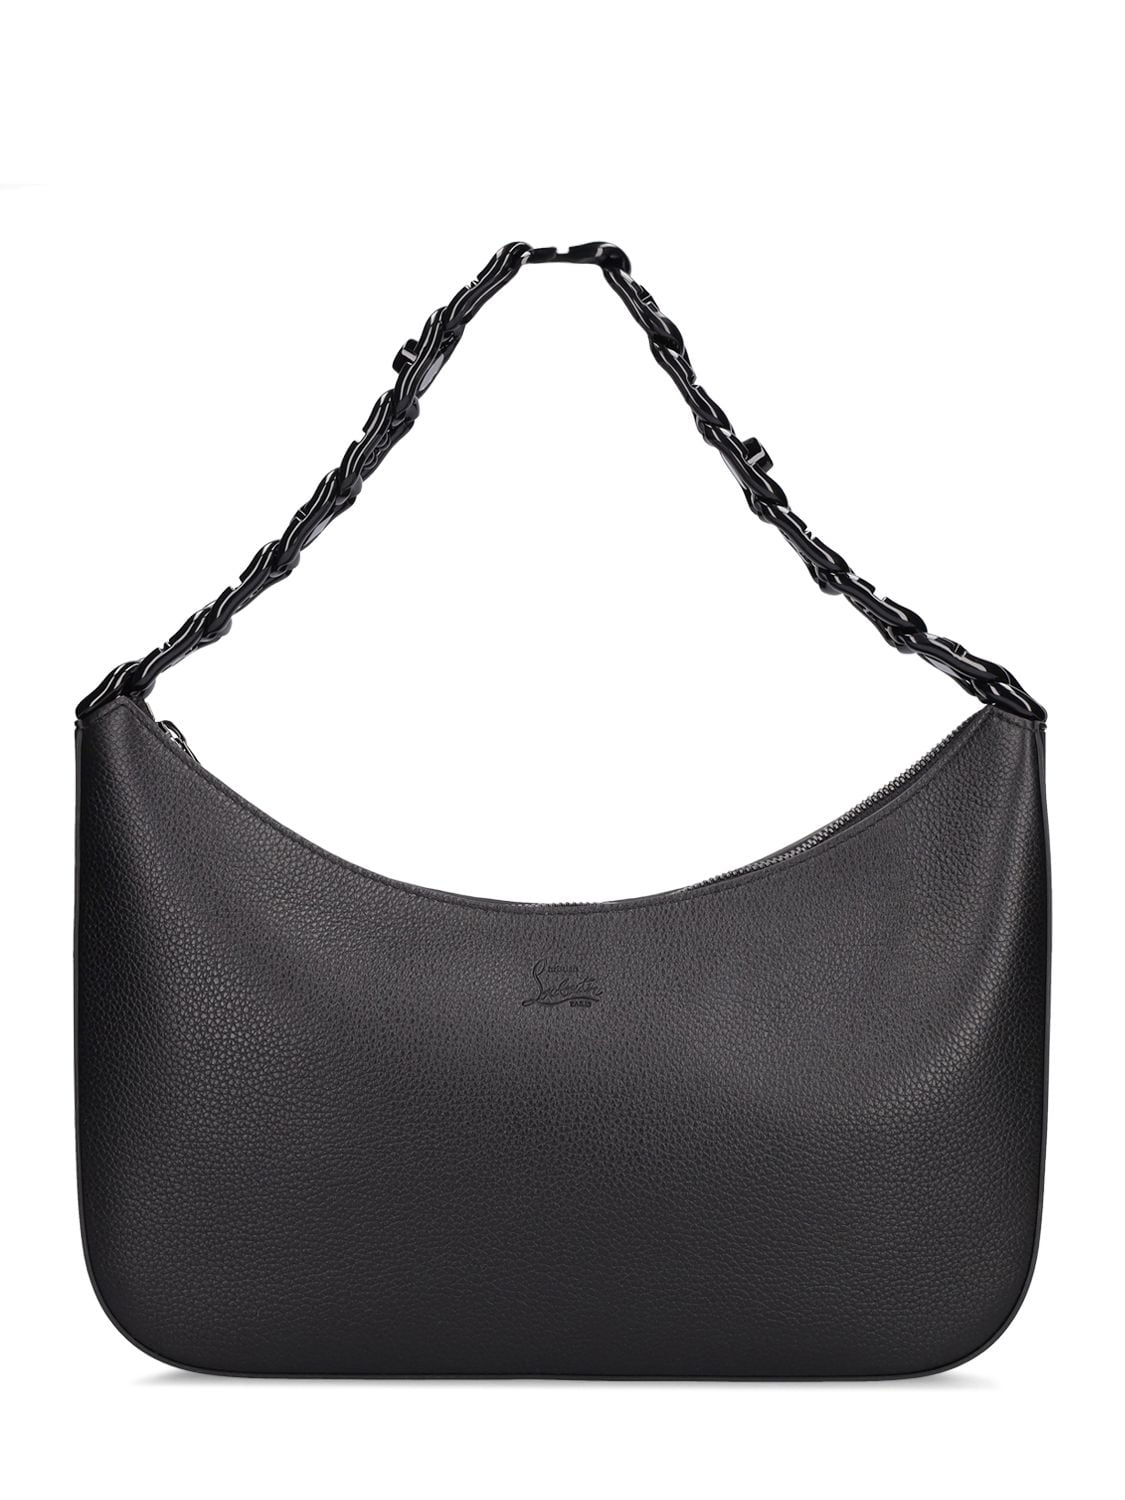 Image of Large Loubila Chain Leather Shoulder Bag